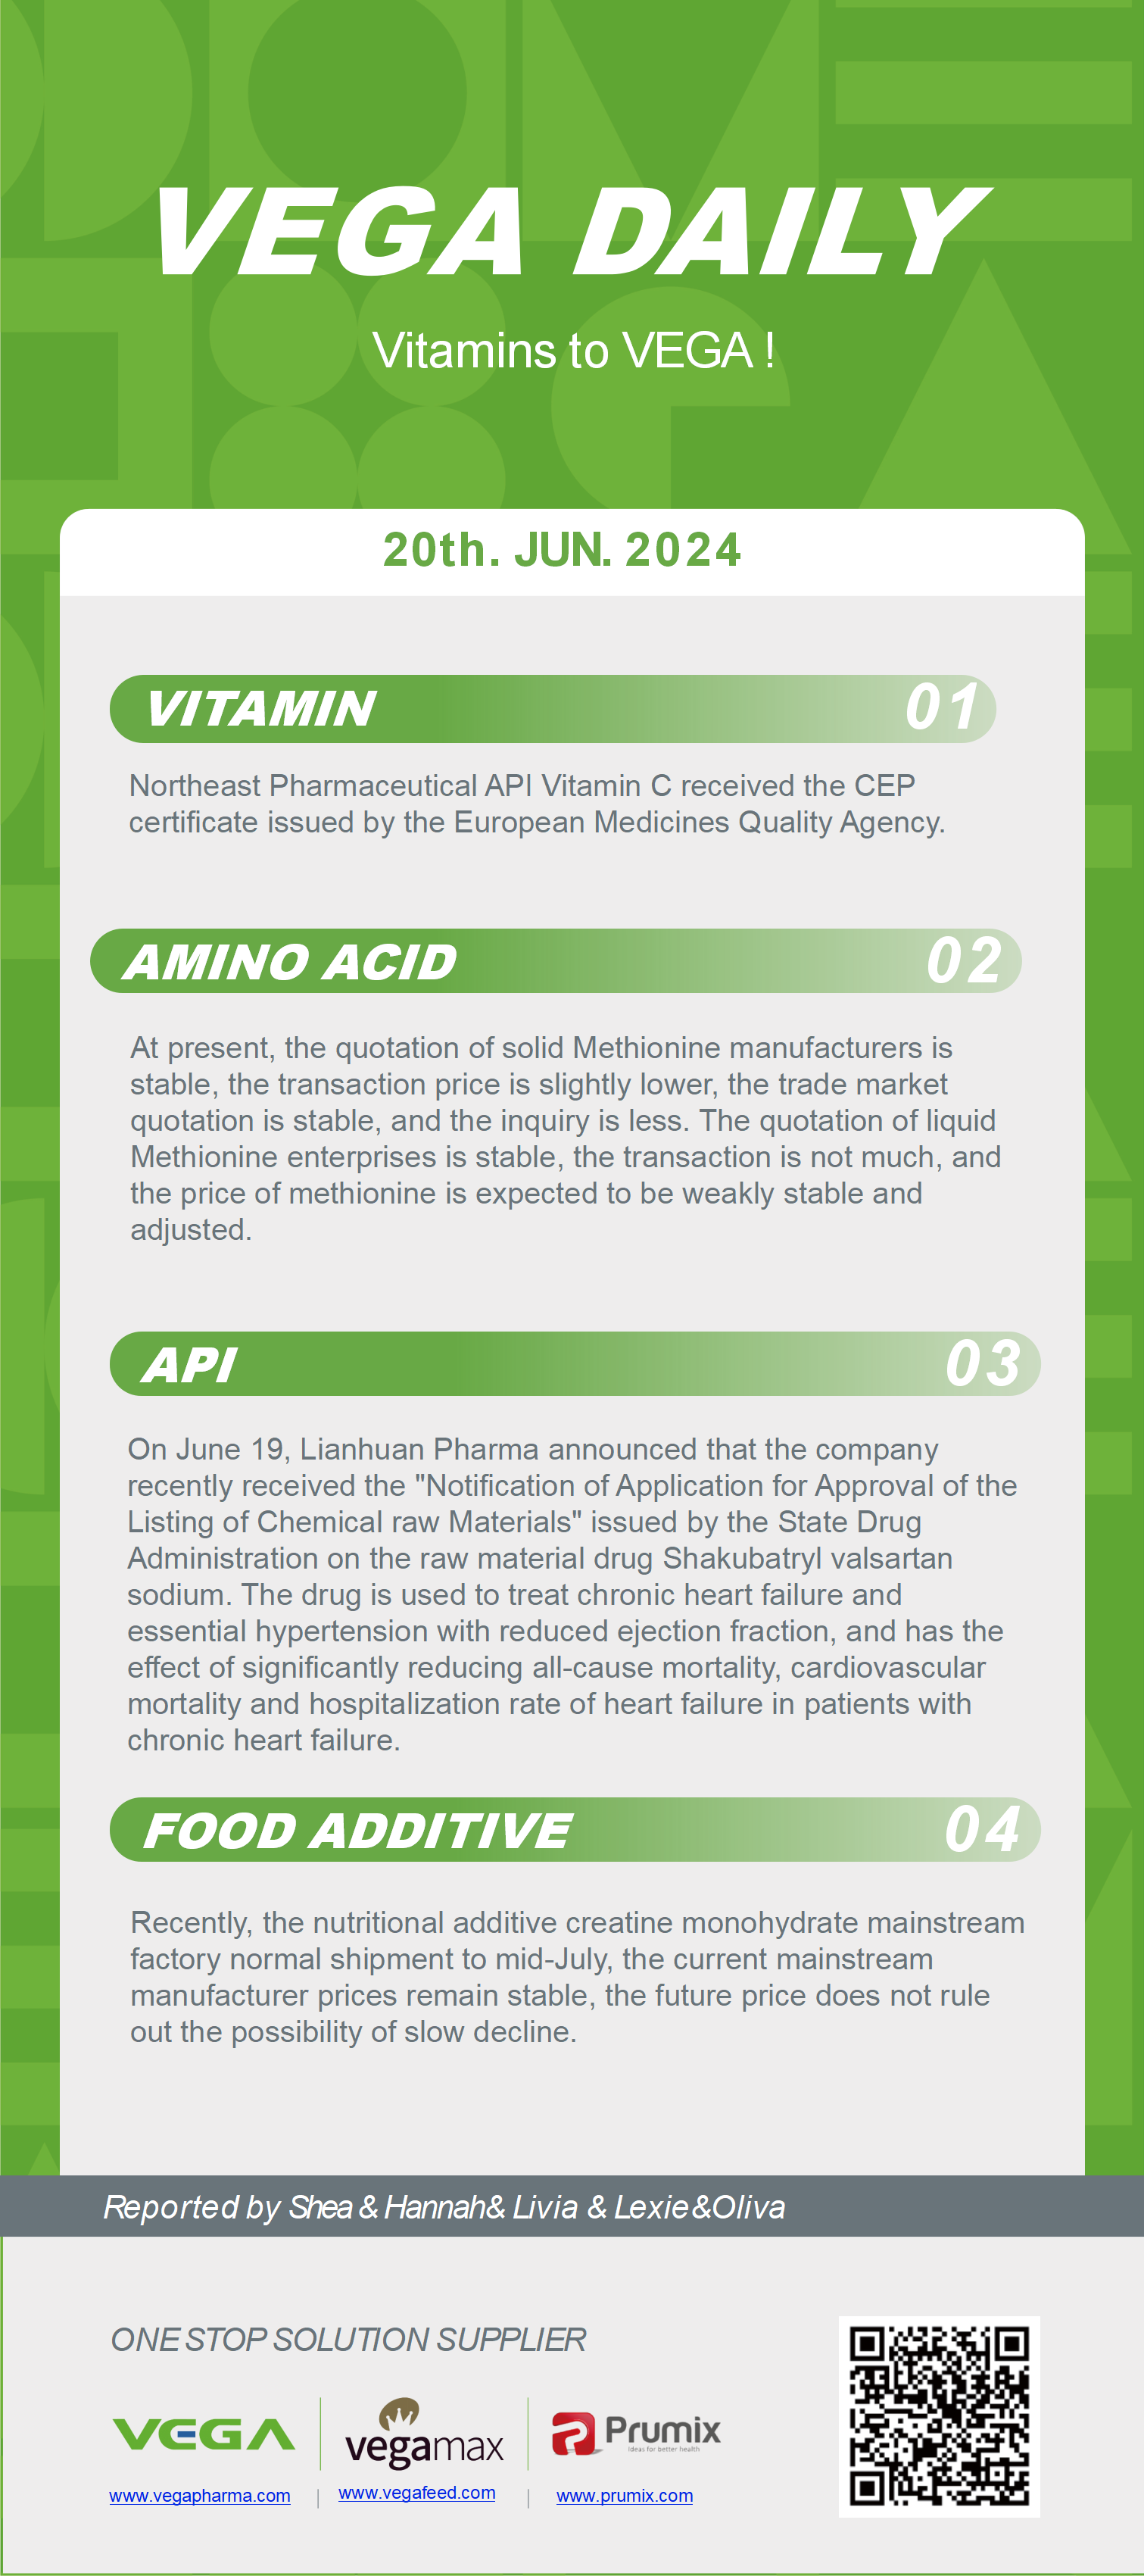 Vega Daily Dated on Jun 20th 2024 Vitamin Amino Acid APl Food Additives.png